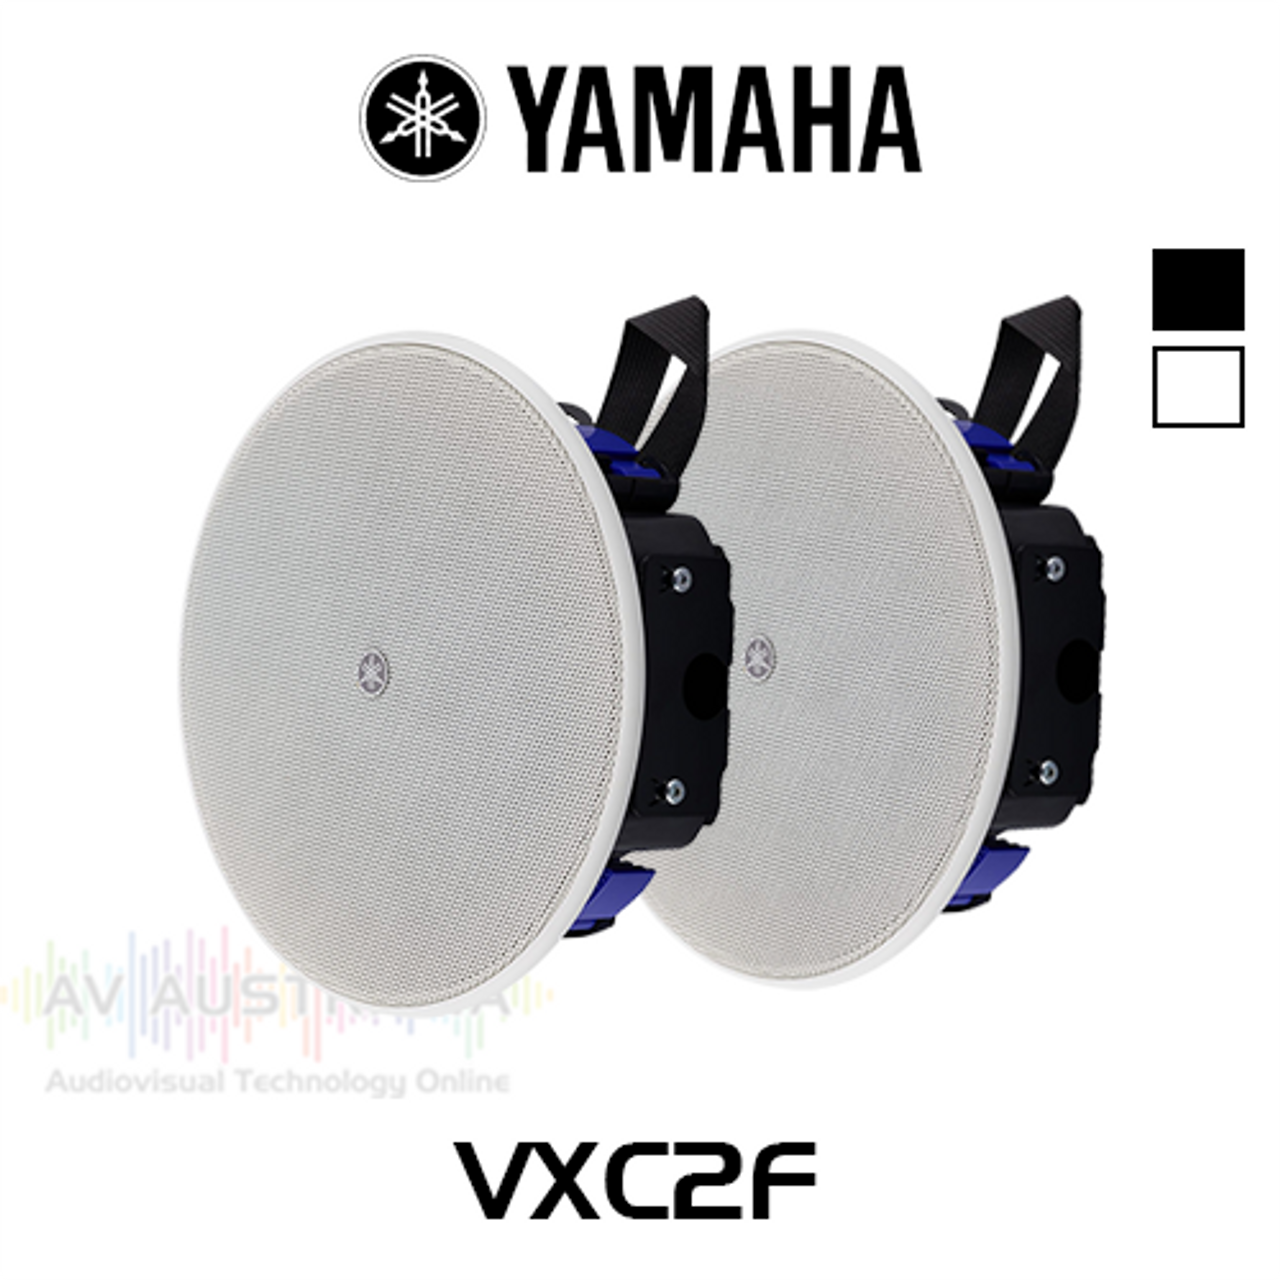 Yamaha VXC2F 2.5" 8 ohm 70/100V Full Range Low Profile In-Ceiling Speakers (Pair)